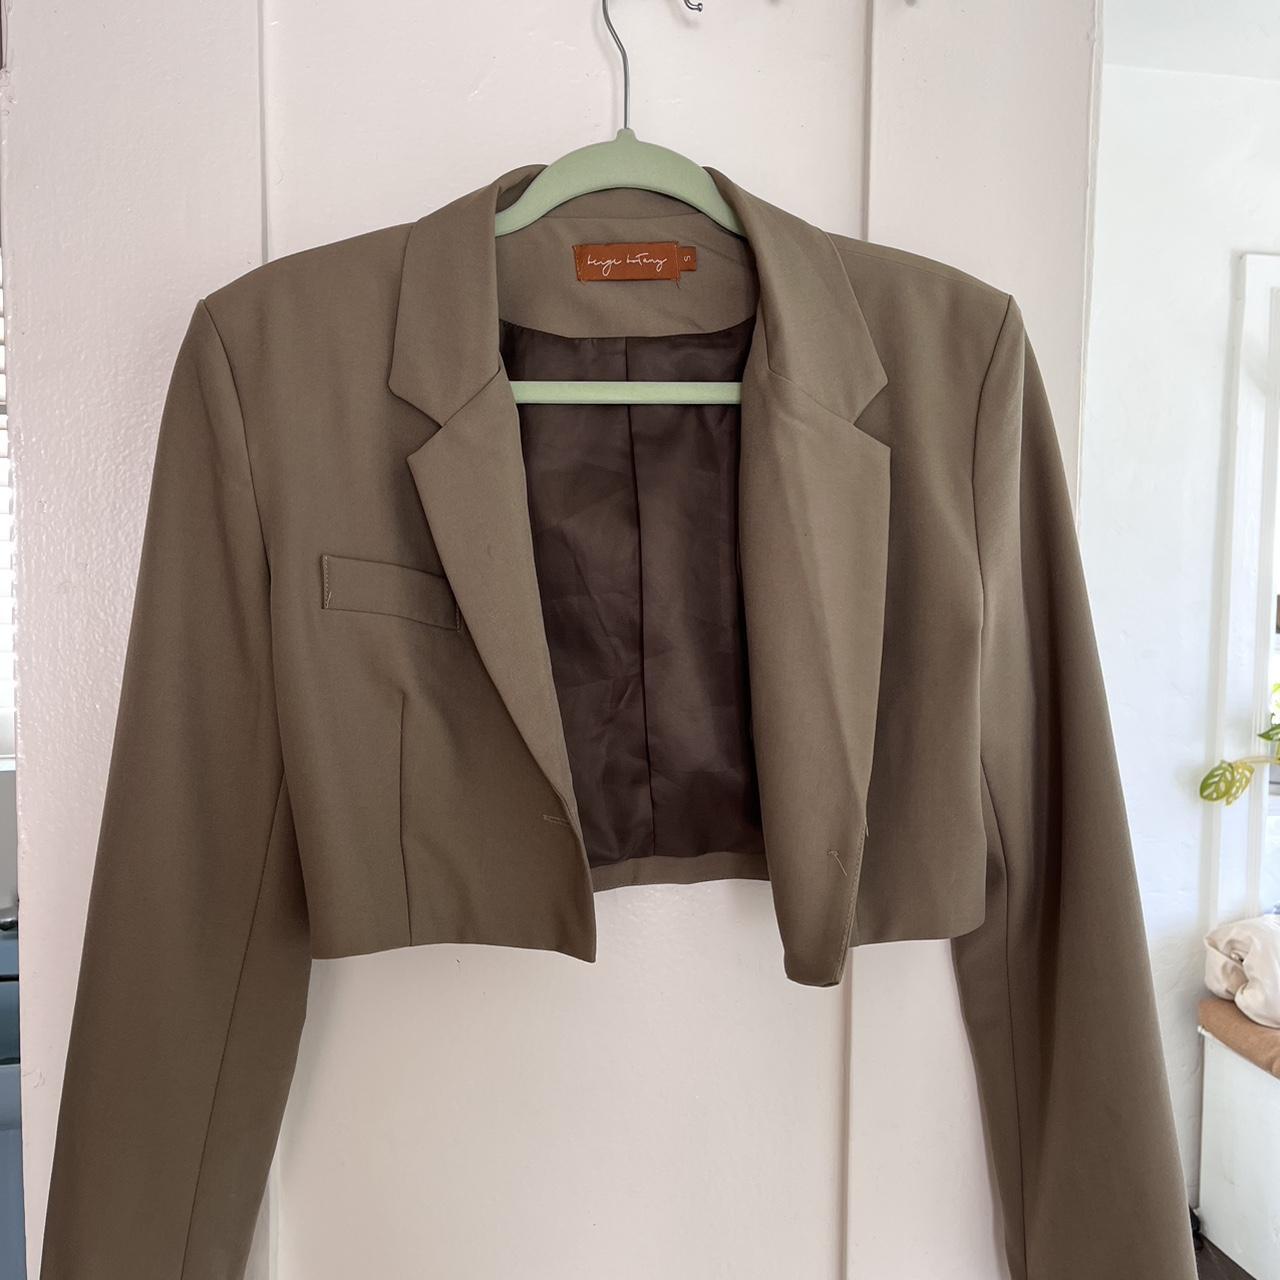 Cropped olive green blazer from Isabel’s cabinet - Depop